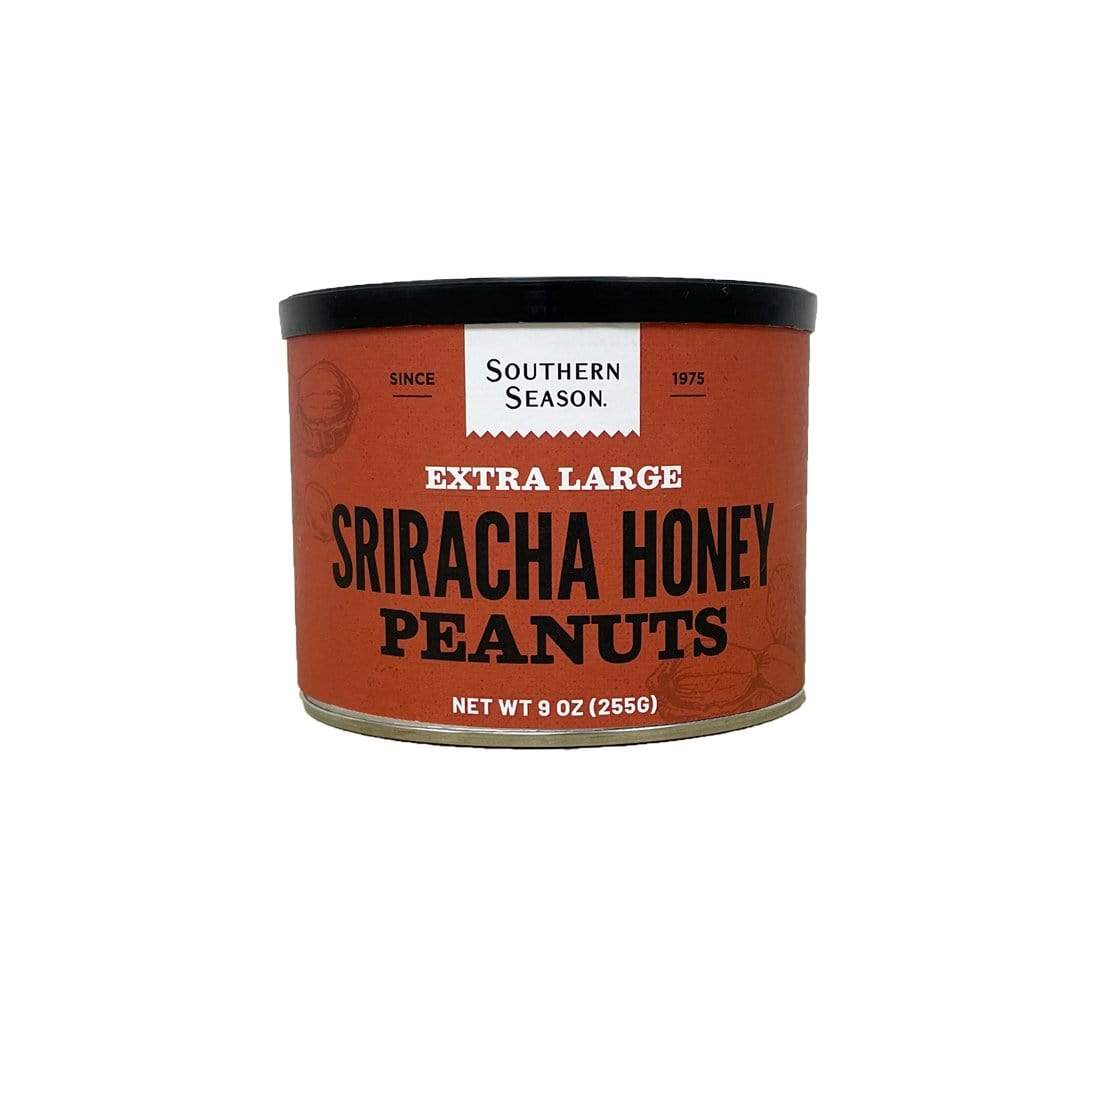 Southern Season Southern Season Sriracha Honey Peanuts 9 oz